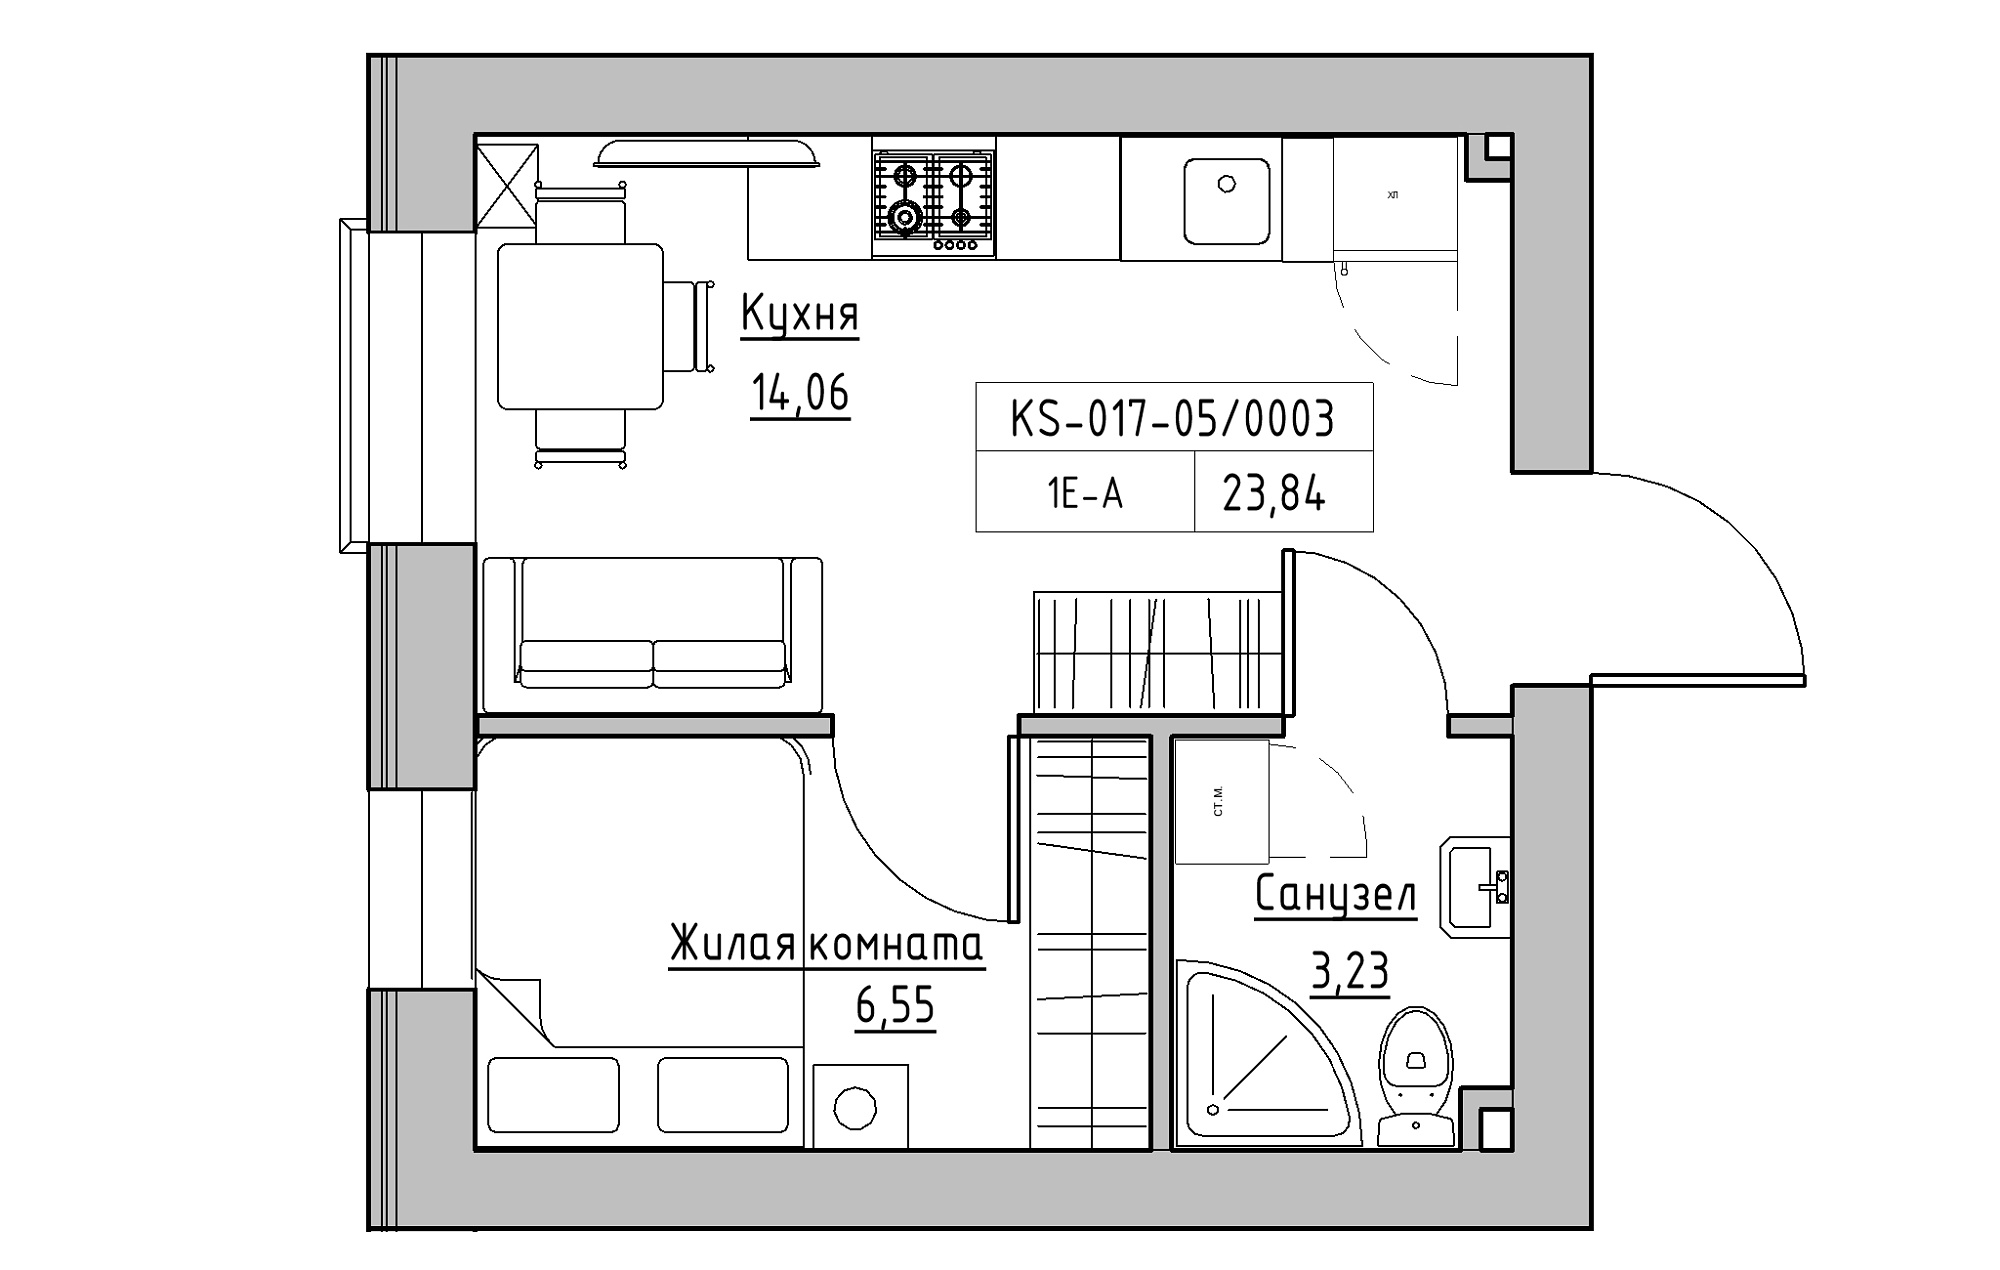 Planning 1-rm flats area 23.84m2, KS-017-05/0003.